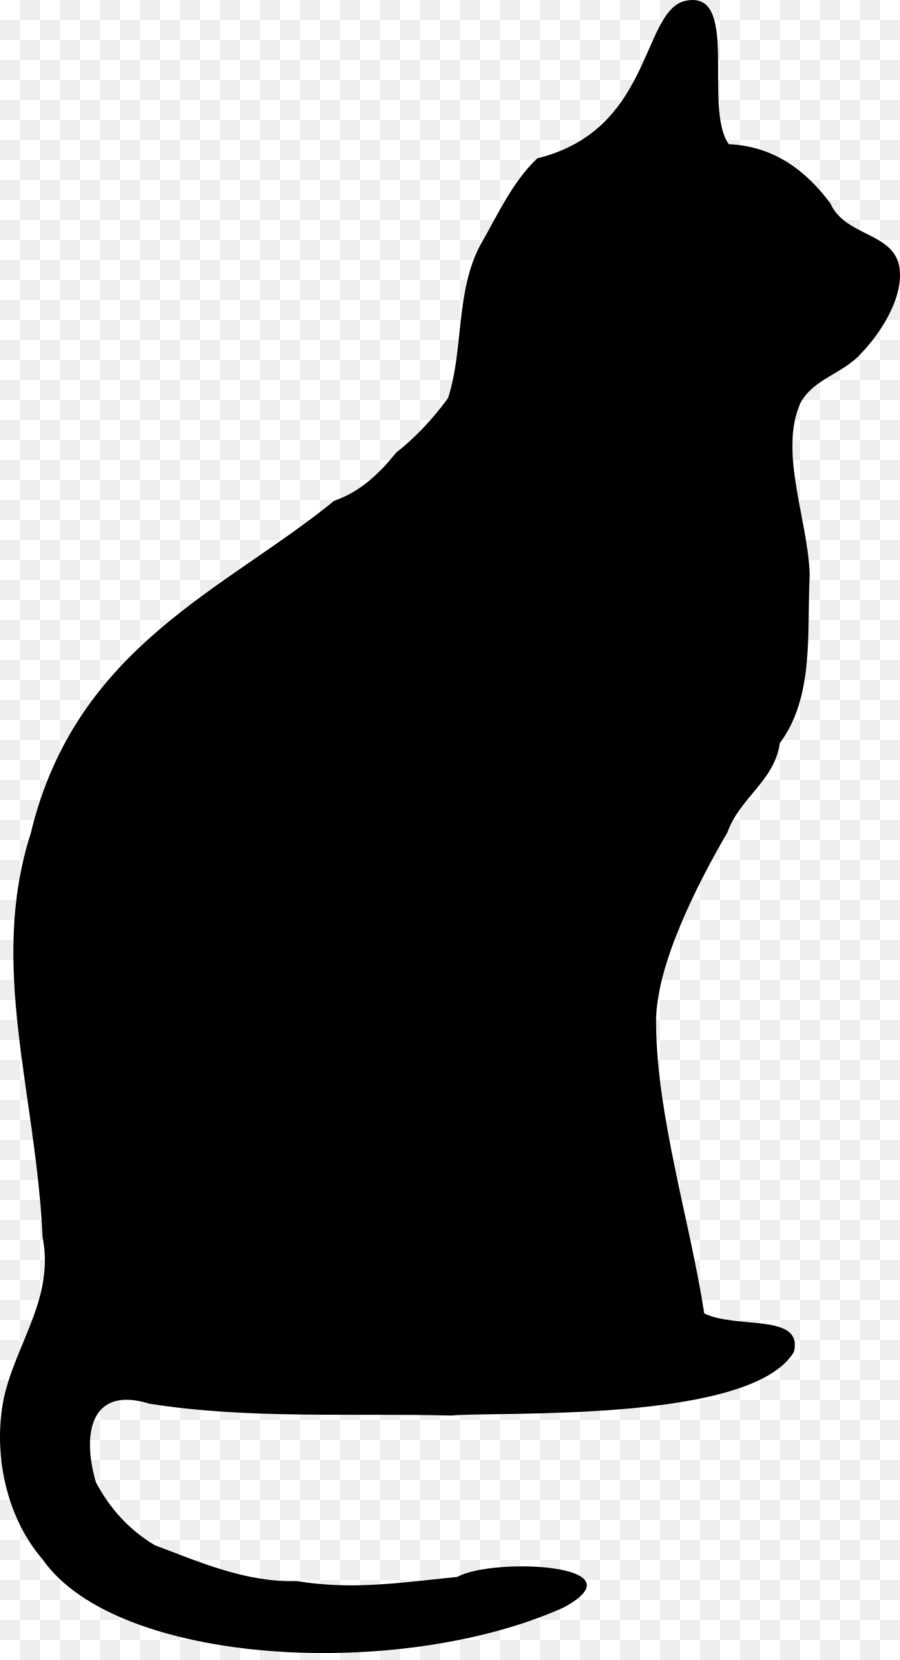 Cat Silhouette Clip art - Cat png download - 1307*2400 - Free Transparent Cat png Download.